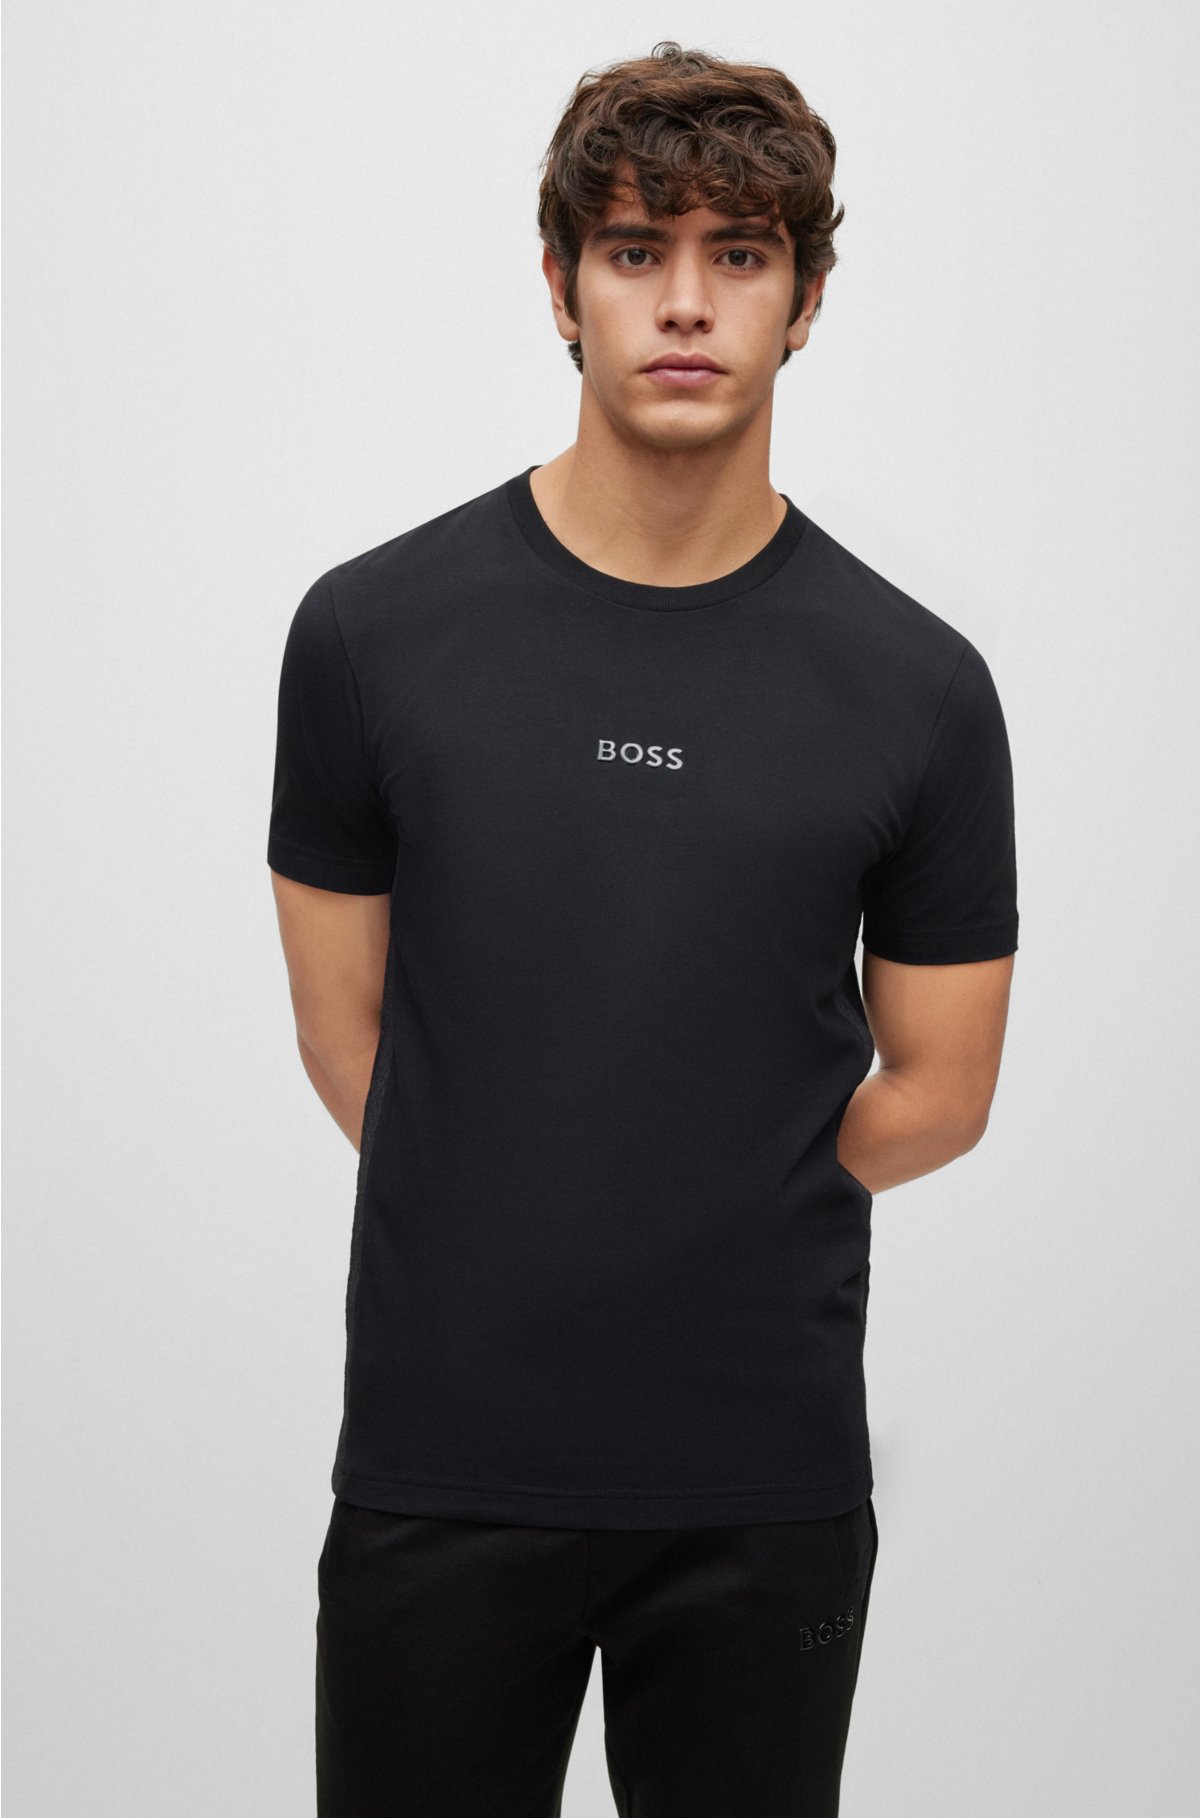 Voorloper Bestuiver delen BOSS - Stretch-cotton regular-fit T-shirt with logo tape